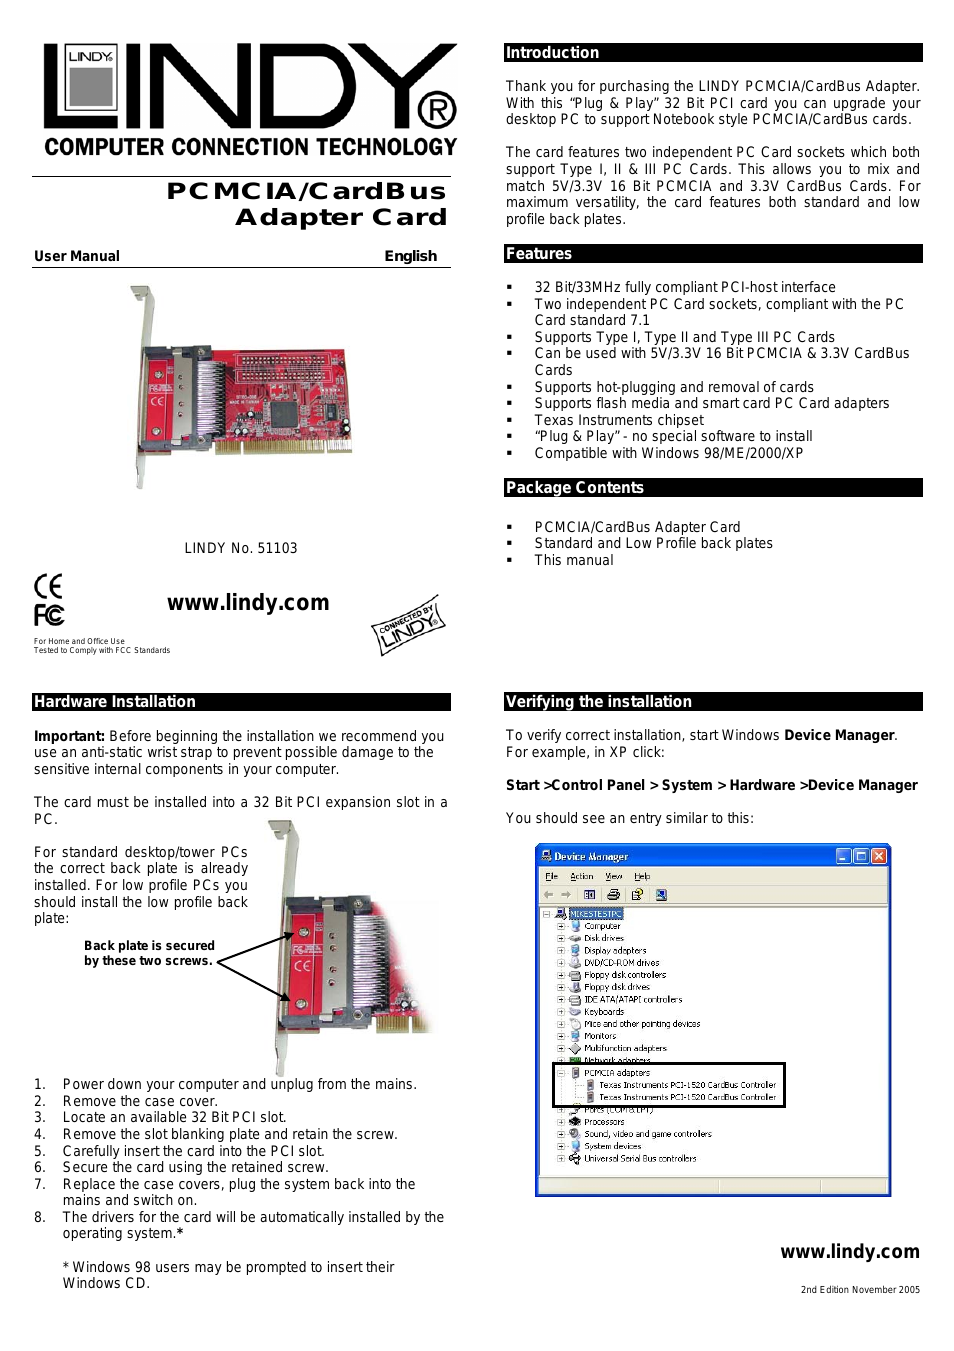 PCMCIA/CardBus Adapter Card 51103